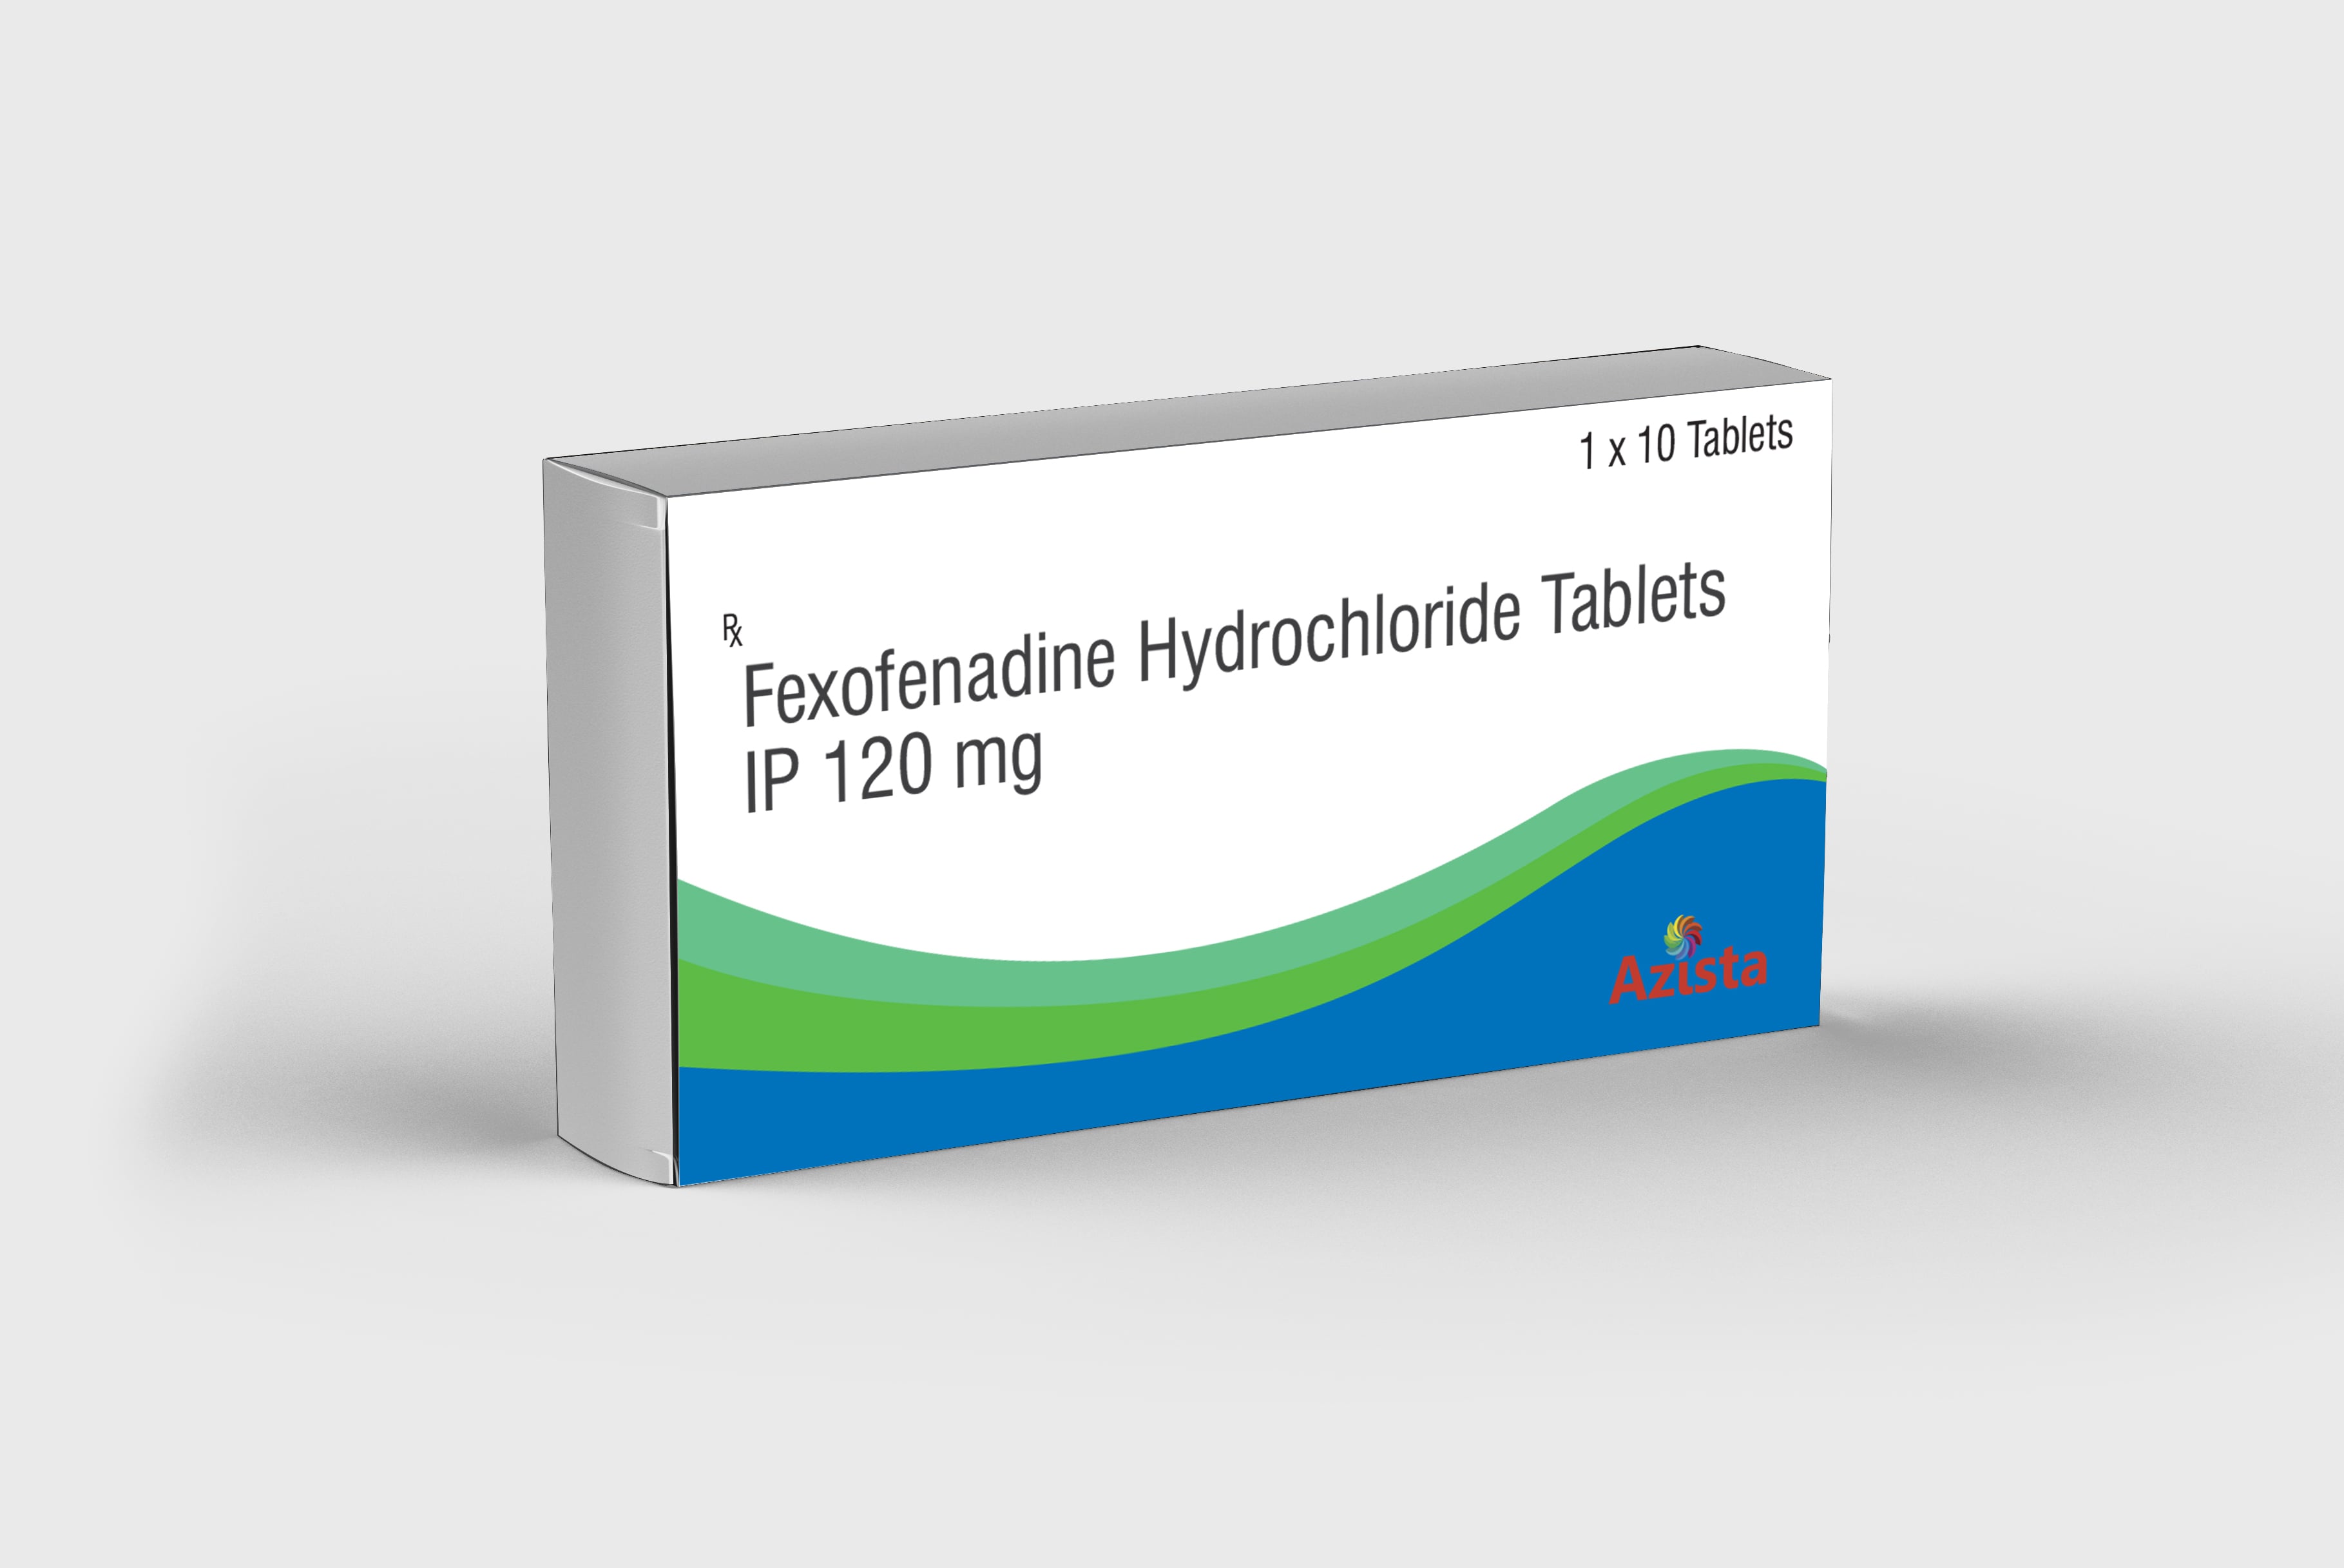 Fexofenadine hydrochloride tablets IP 120mg